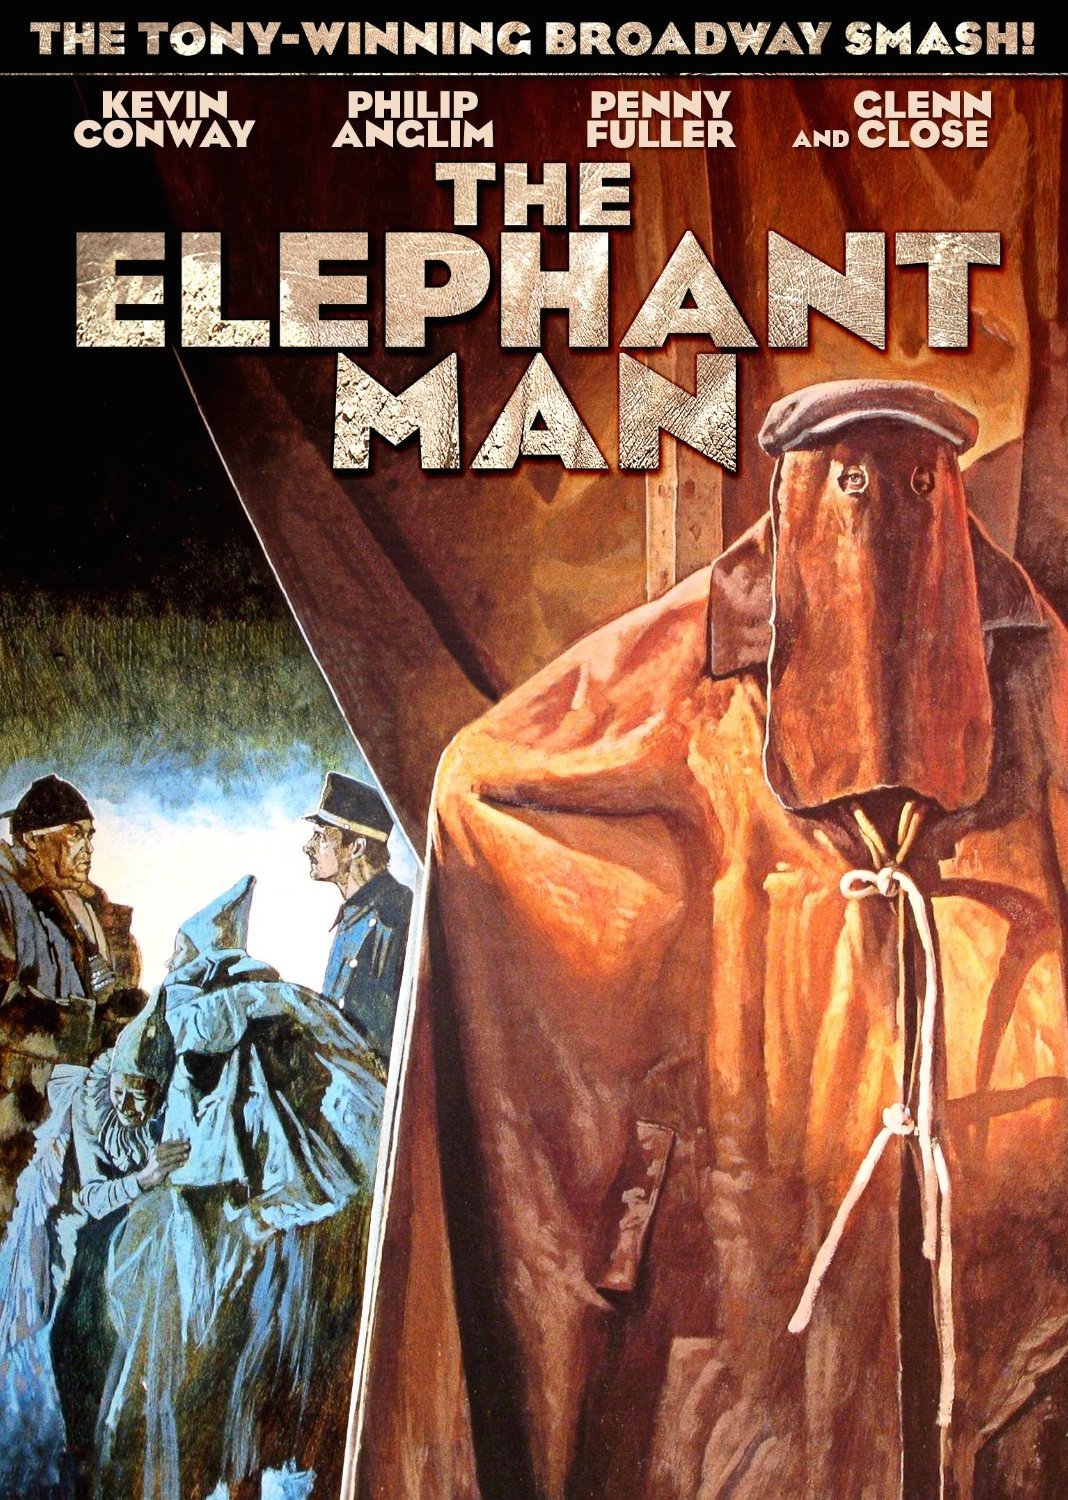 THE ELEPHANT MAN DVD